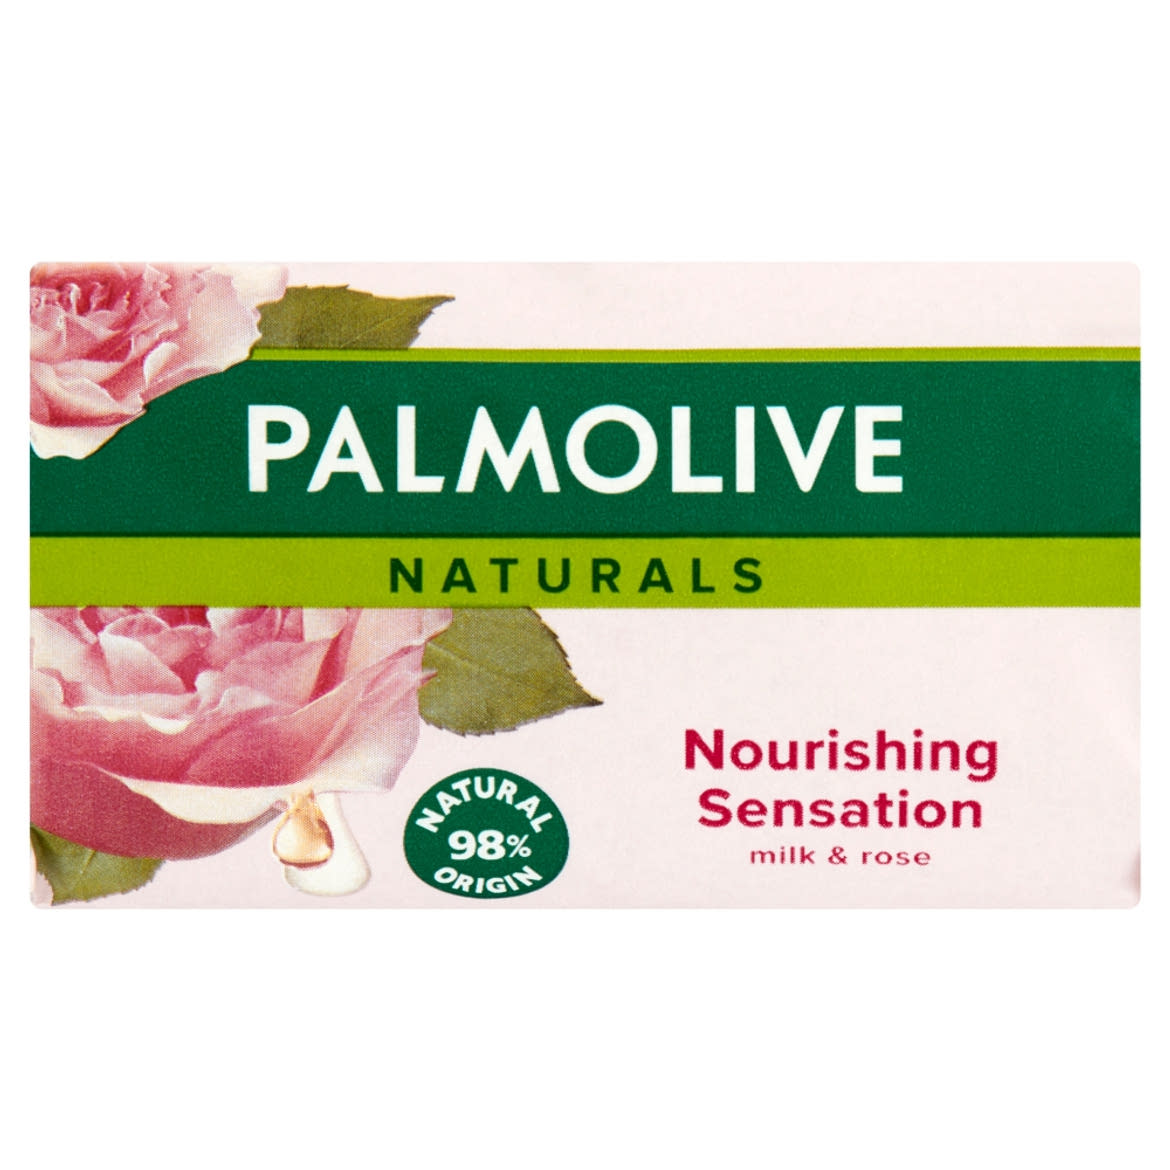 Palmolive Naturals Nourishing Sensation Milk & Rose pipereszappan 90 g